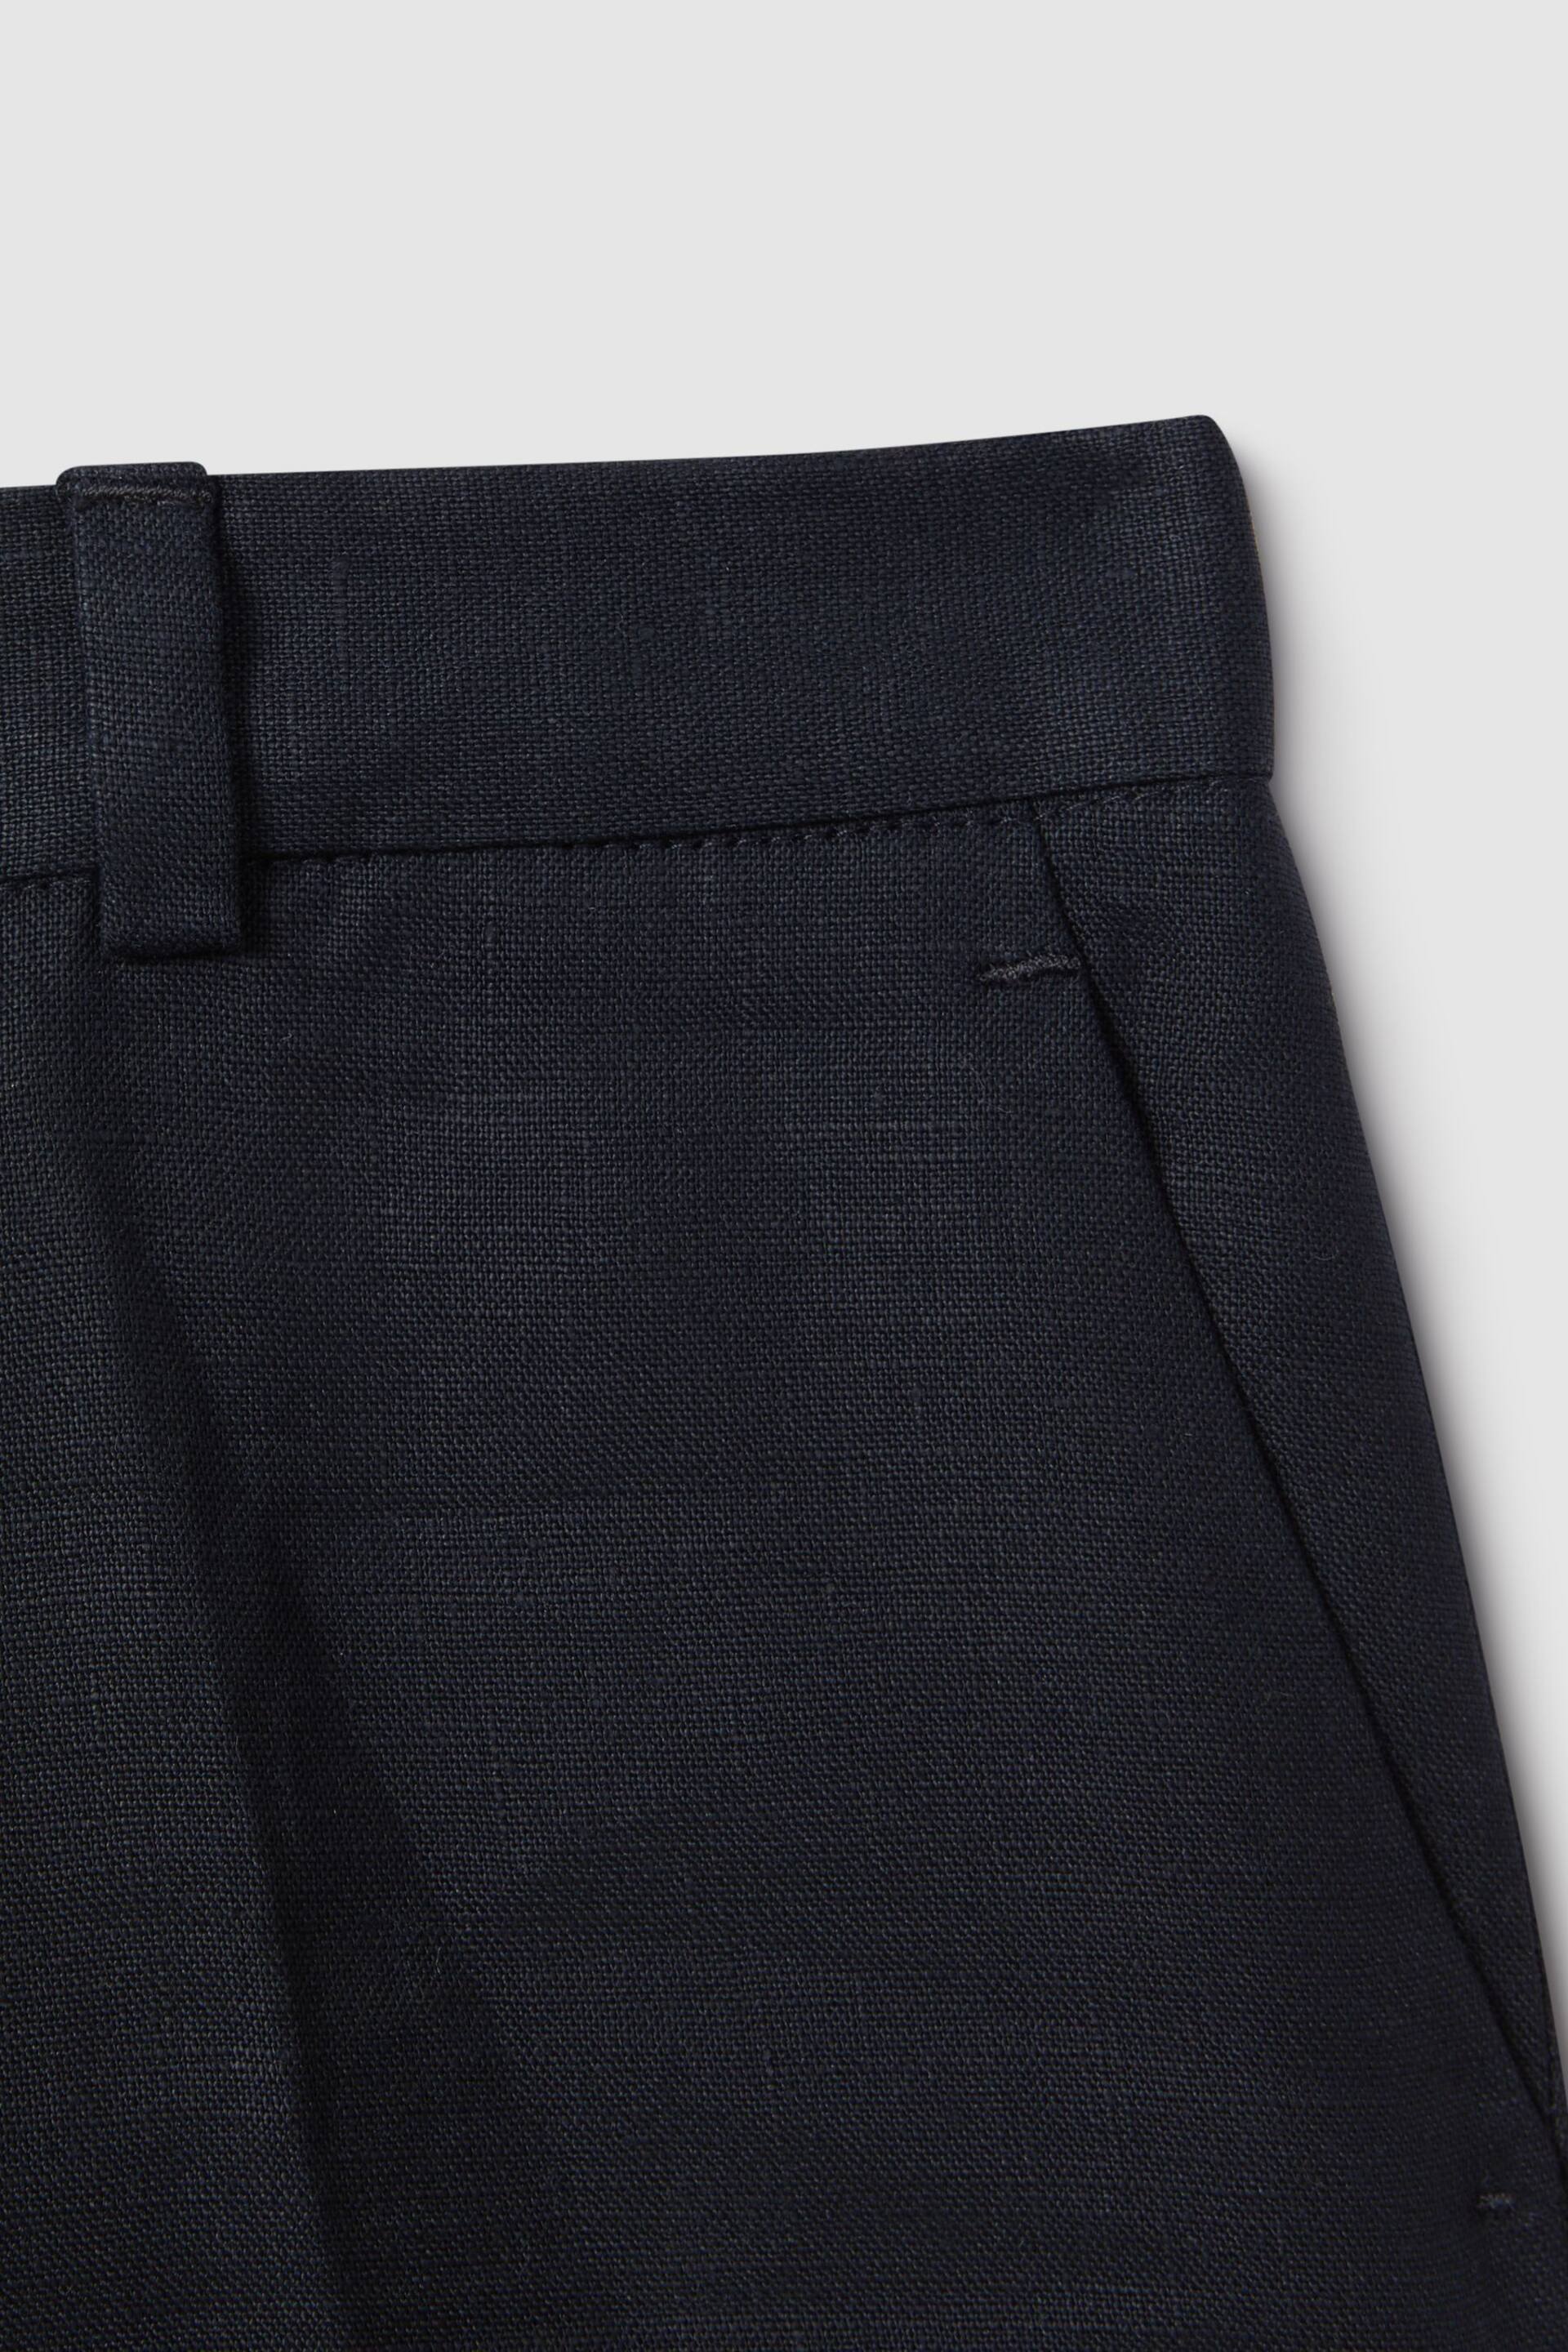 Reiss Navy Kin Junior Slim Fit Linen Adjustable Shorts - Image 4 of 4